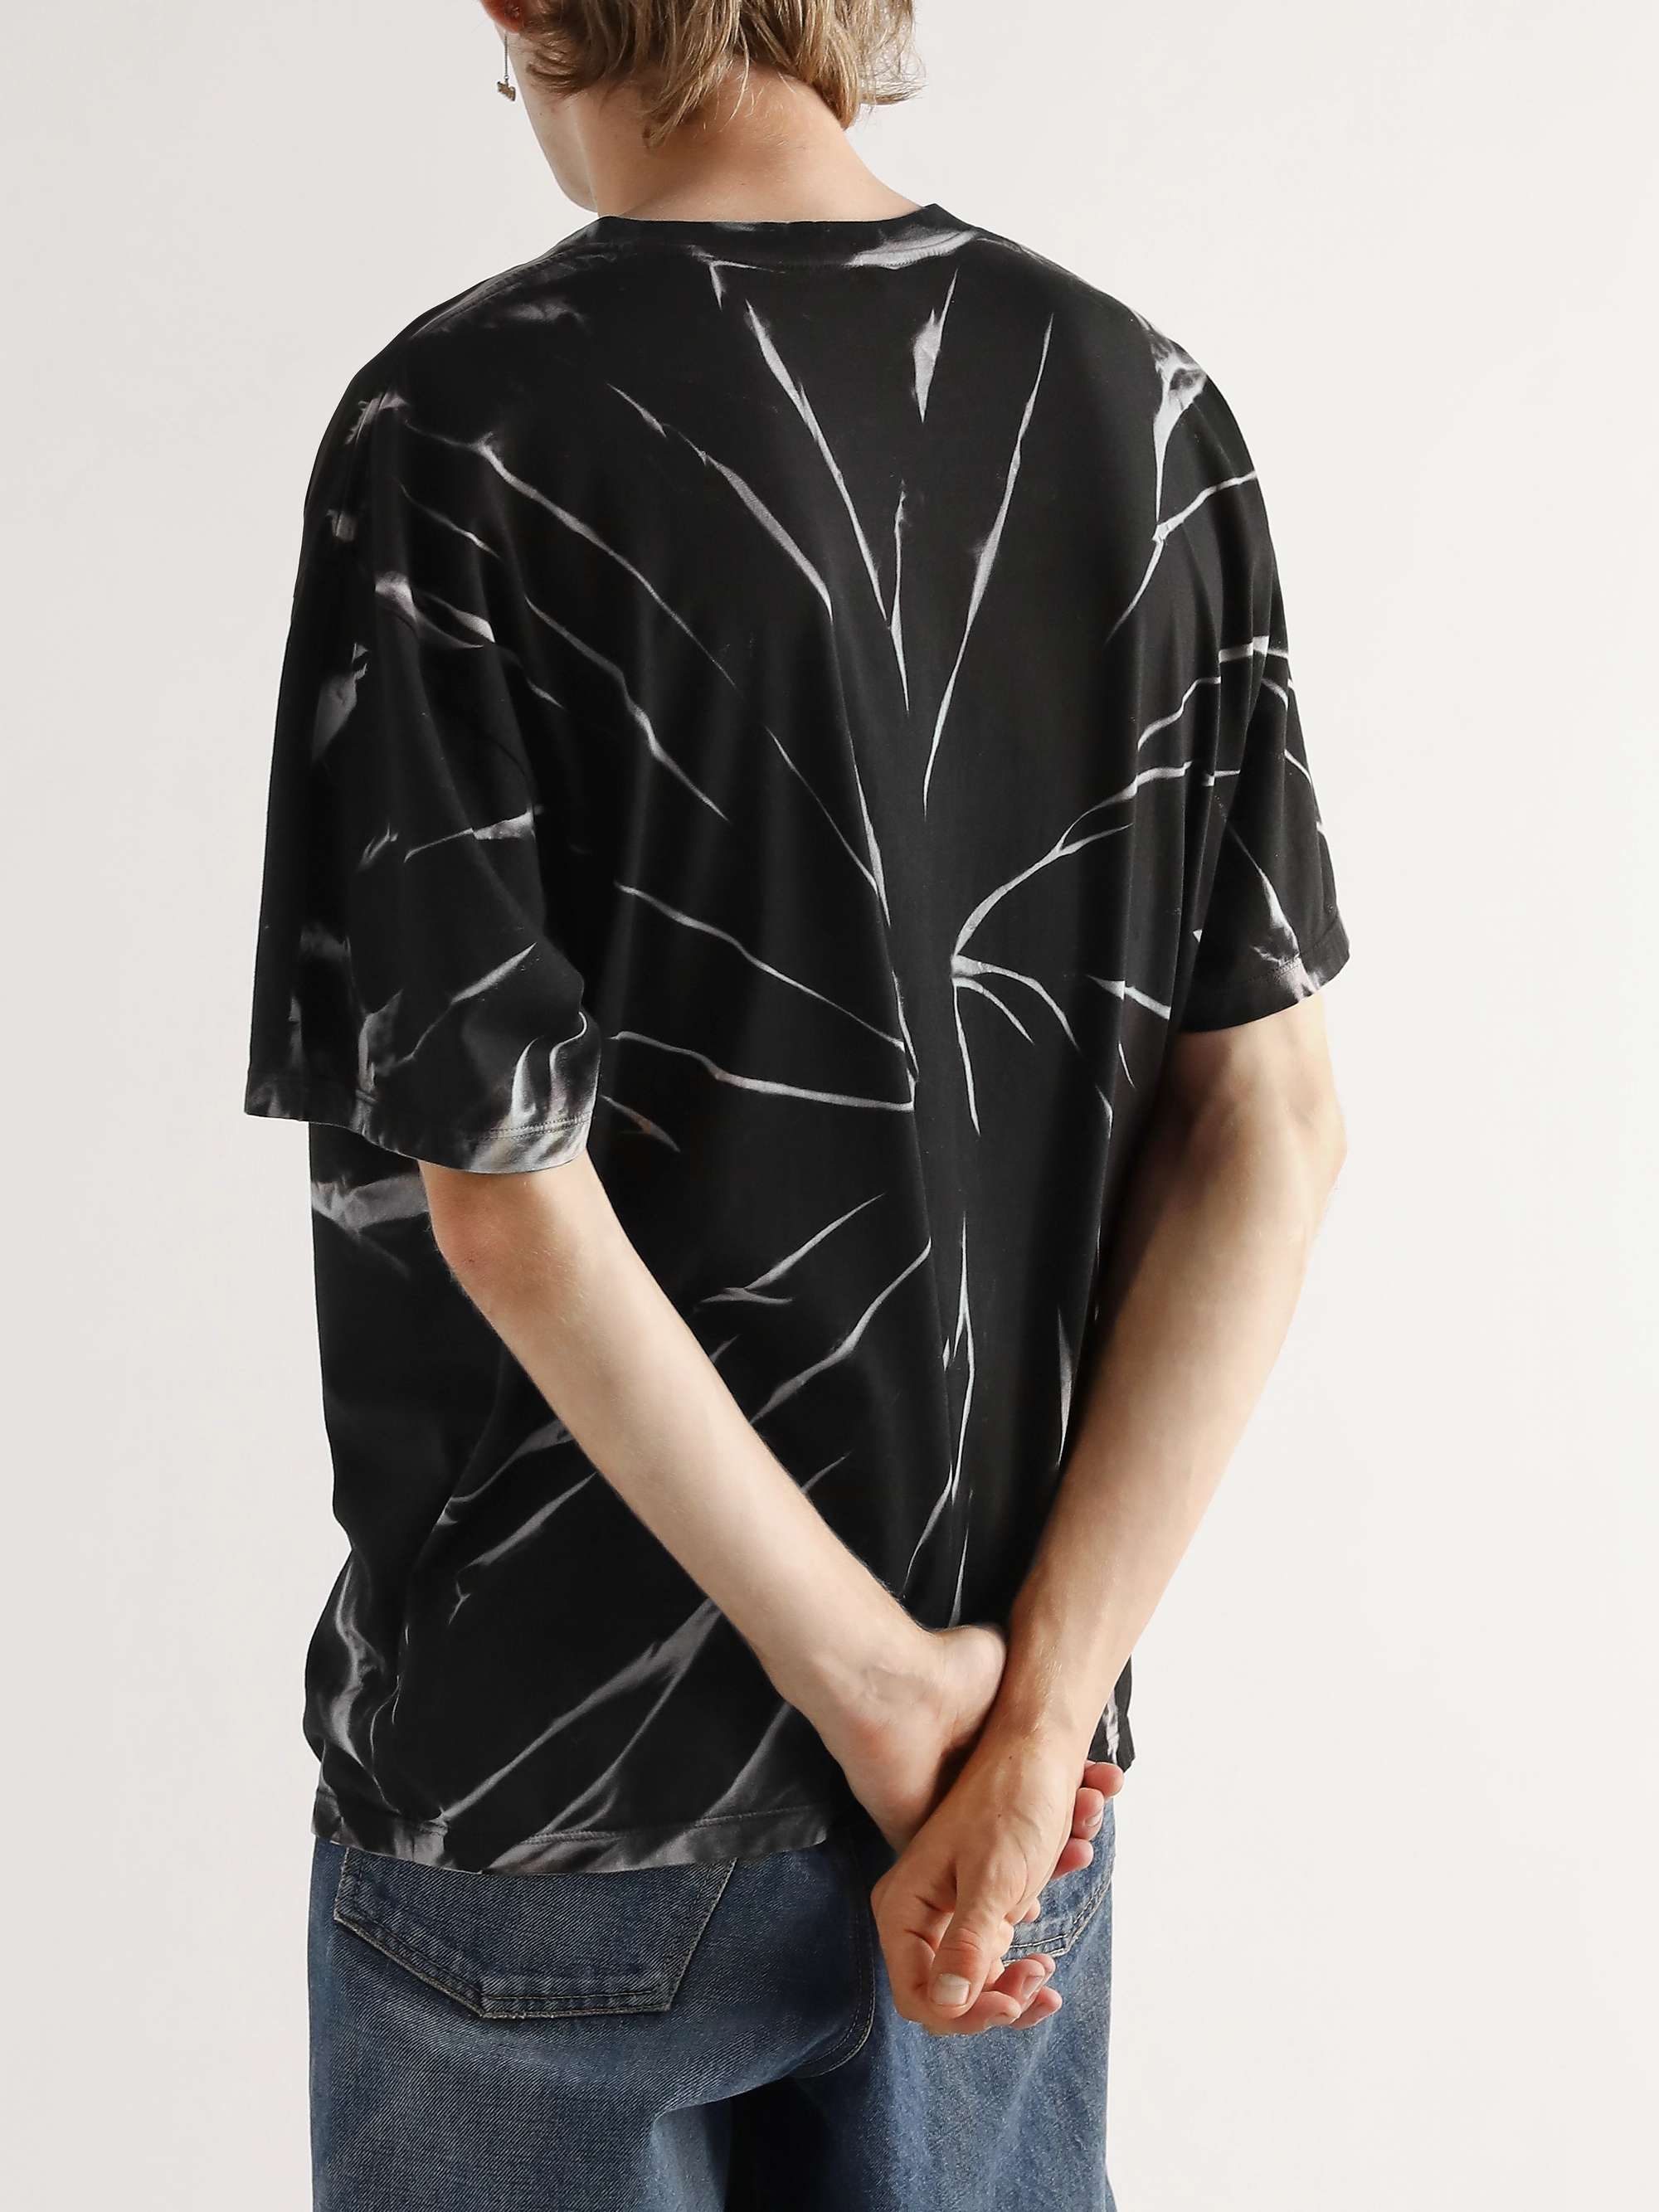 CELINE HOMME Tie-Dyed Logo-Print Cotton-Jersey T-Shirt